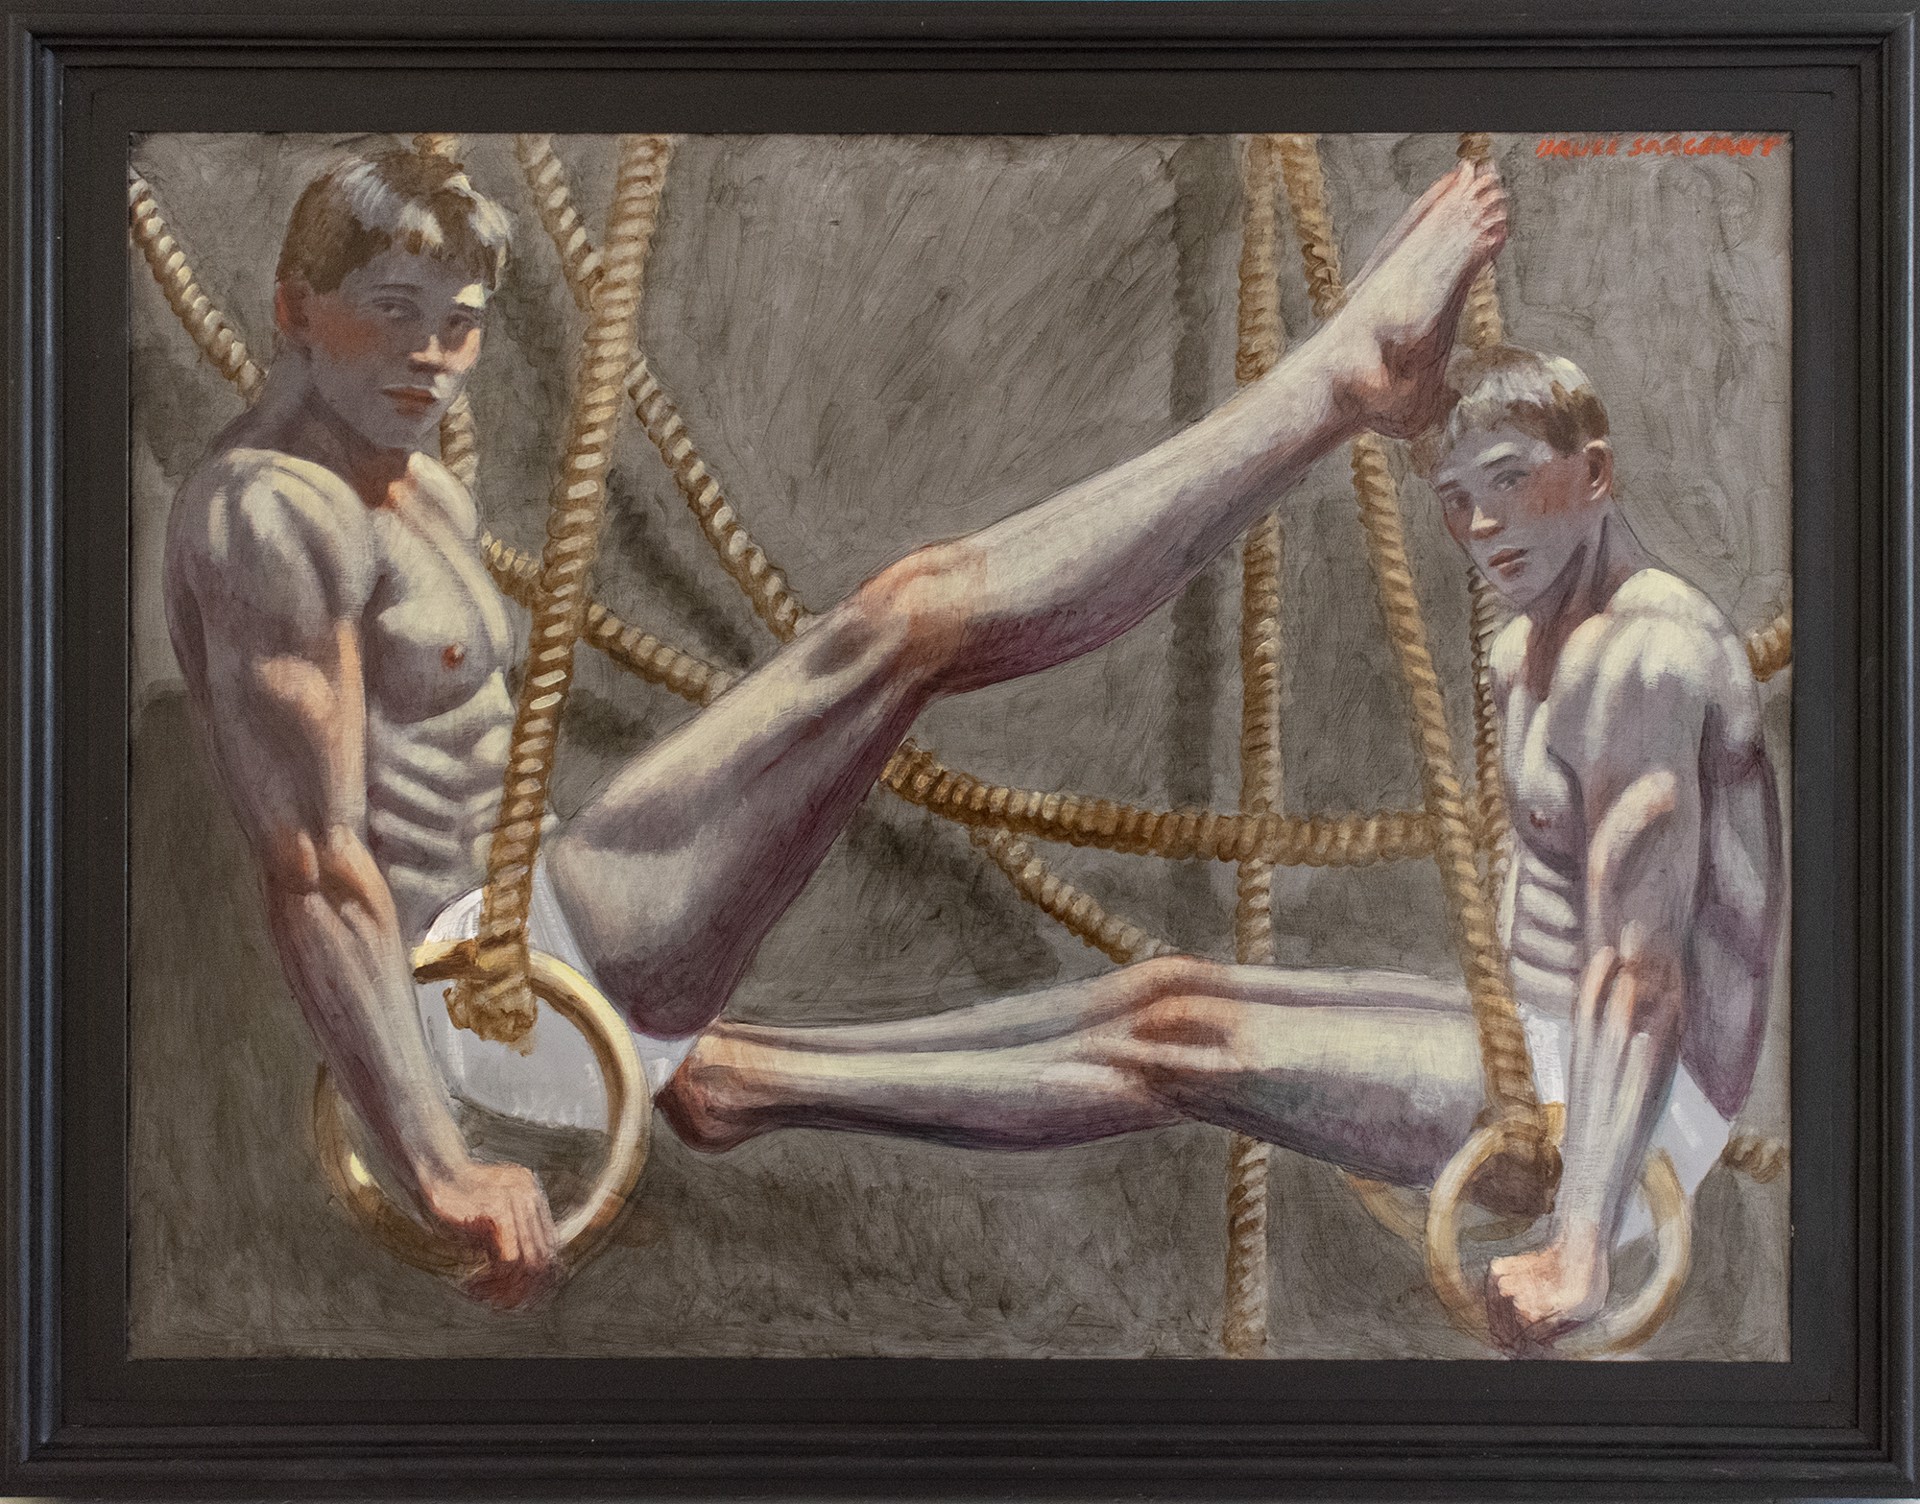 Gymnasts on Rings by Mark Beard